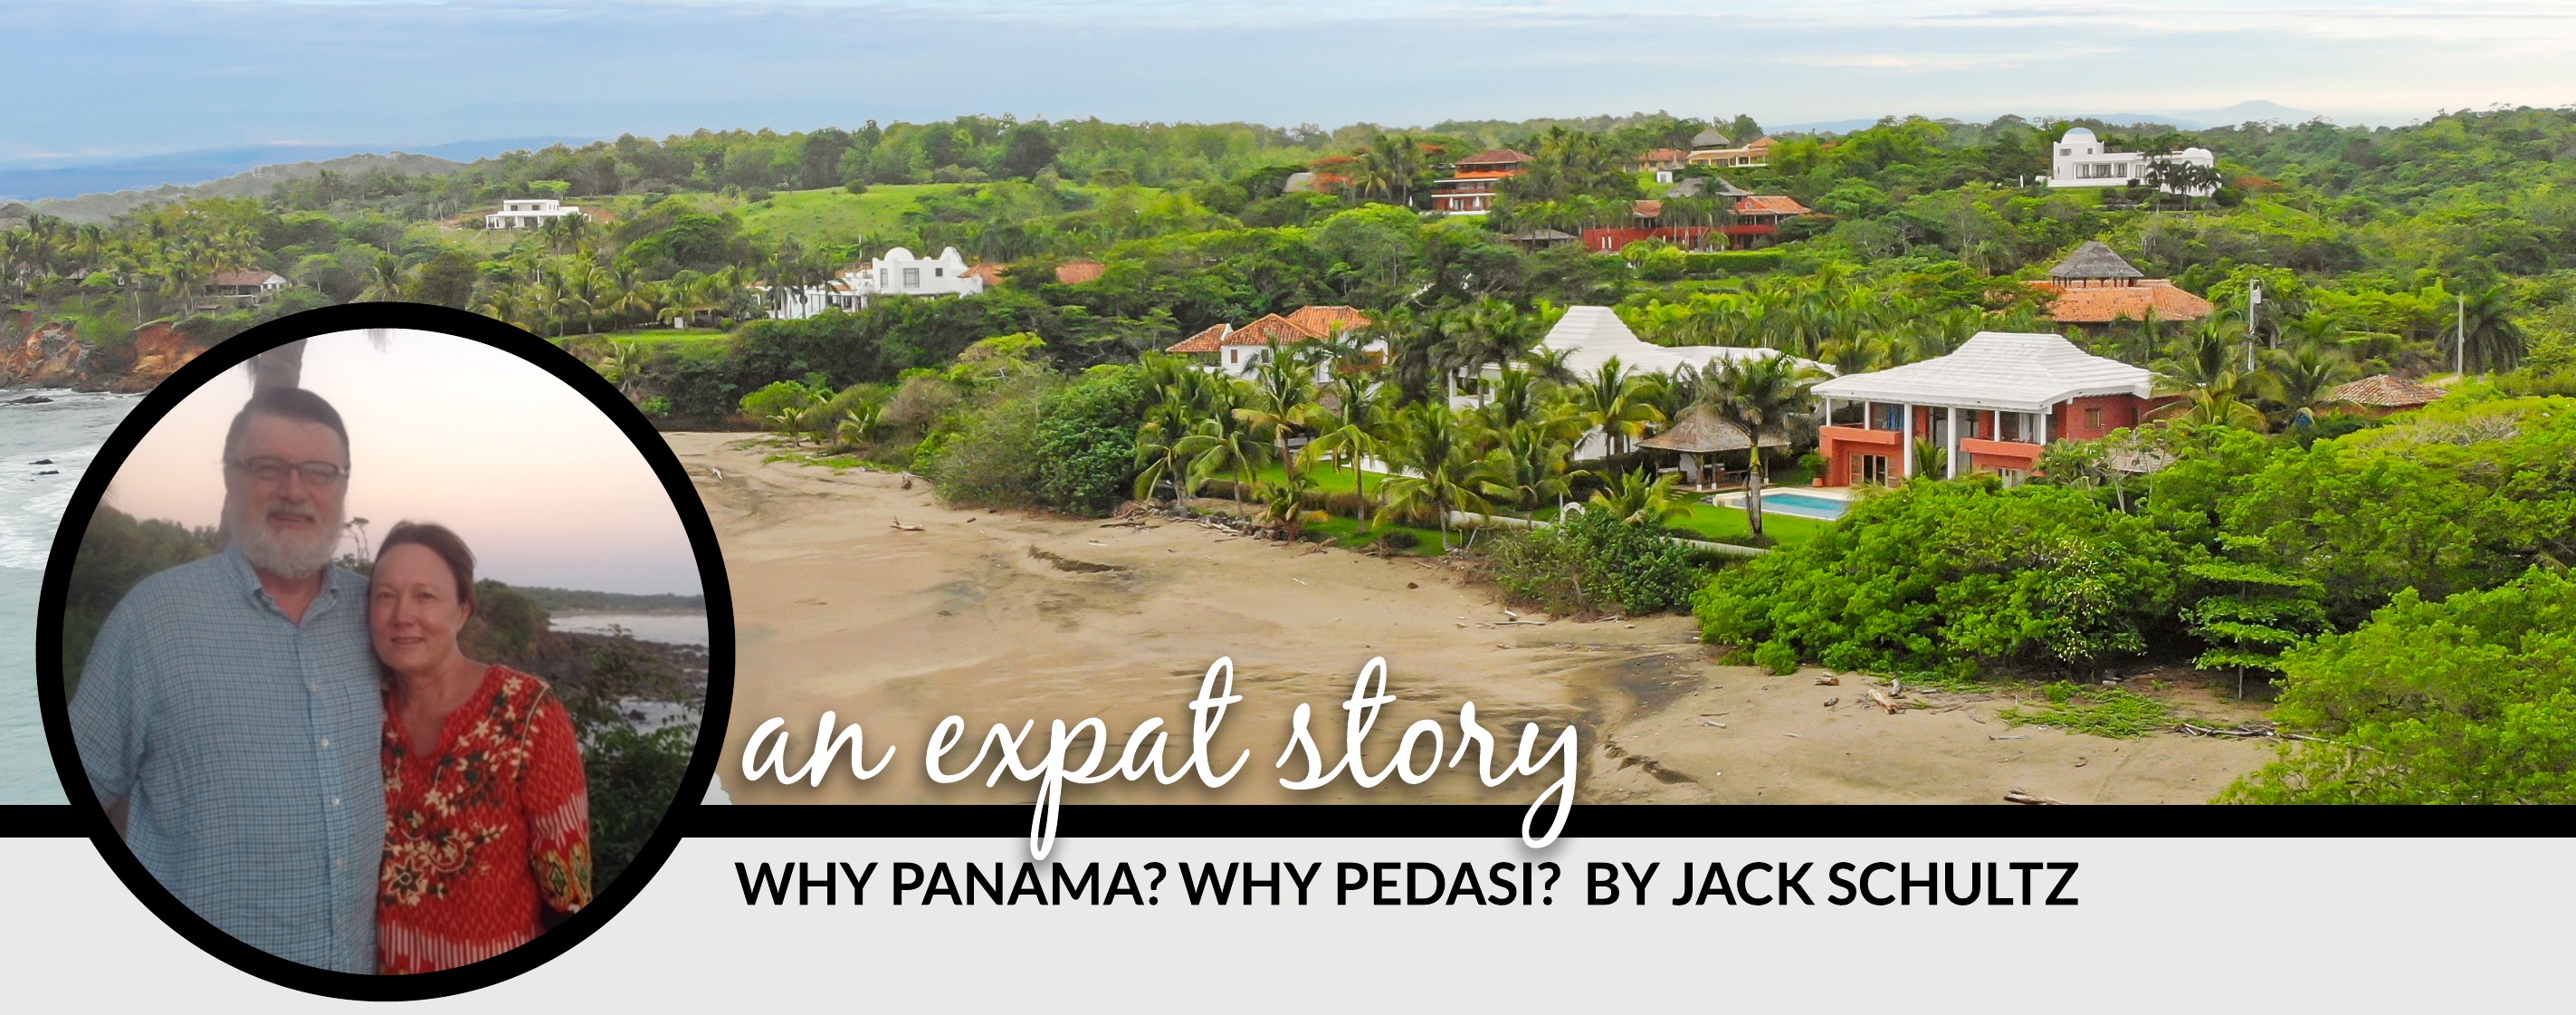 Why Pedasi Panama by Jack Schultz